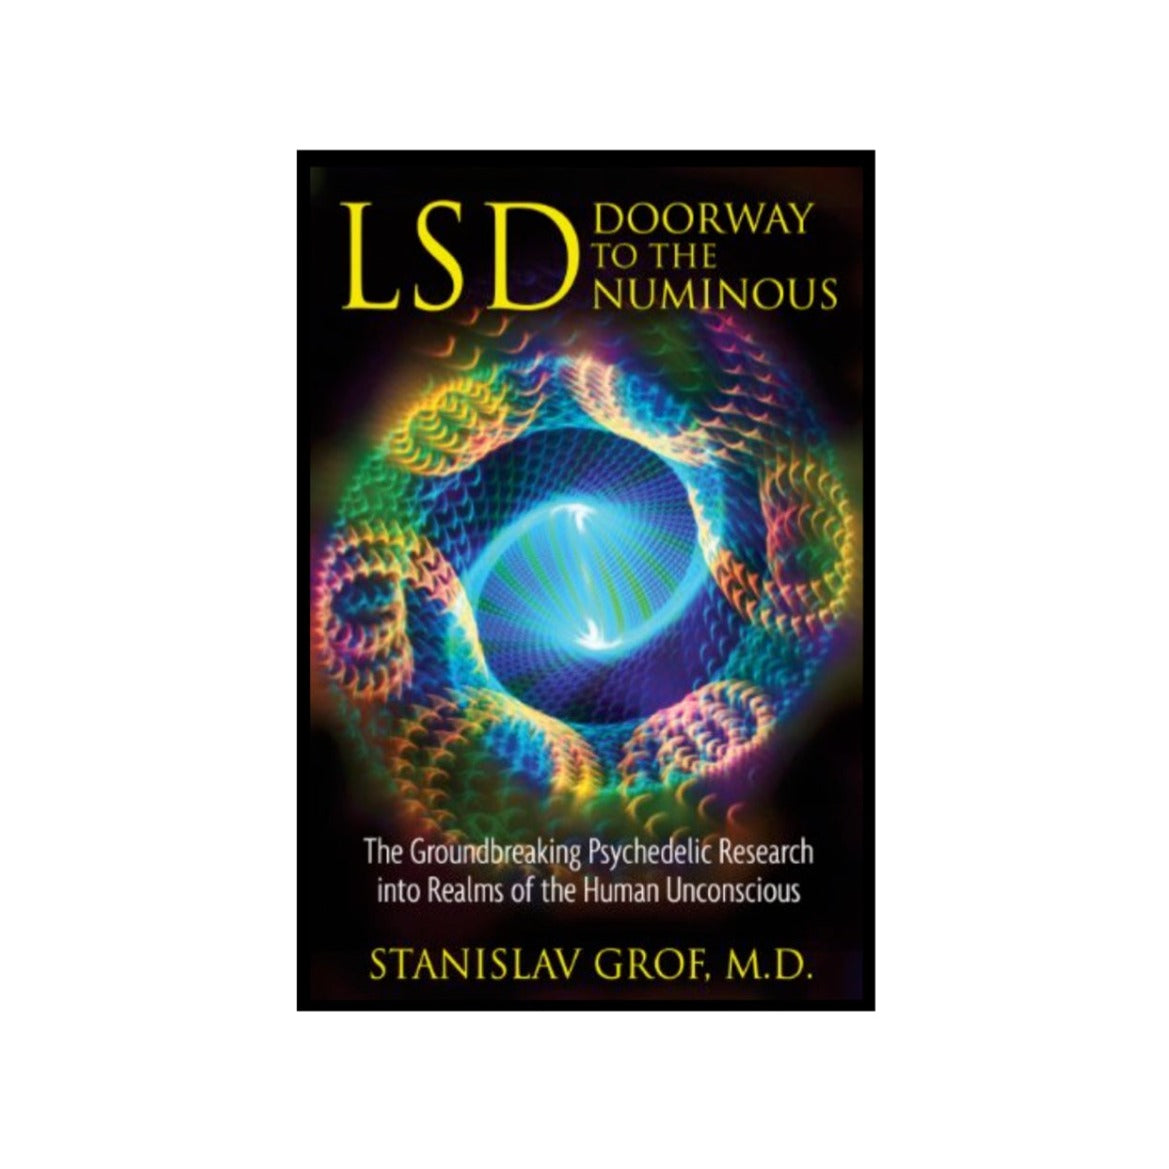 LSD: Doorway to the Numinous by Stanislav Grof